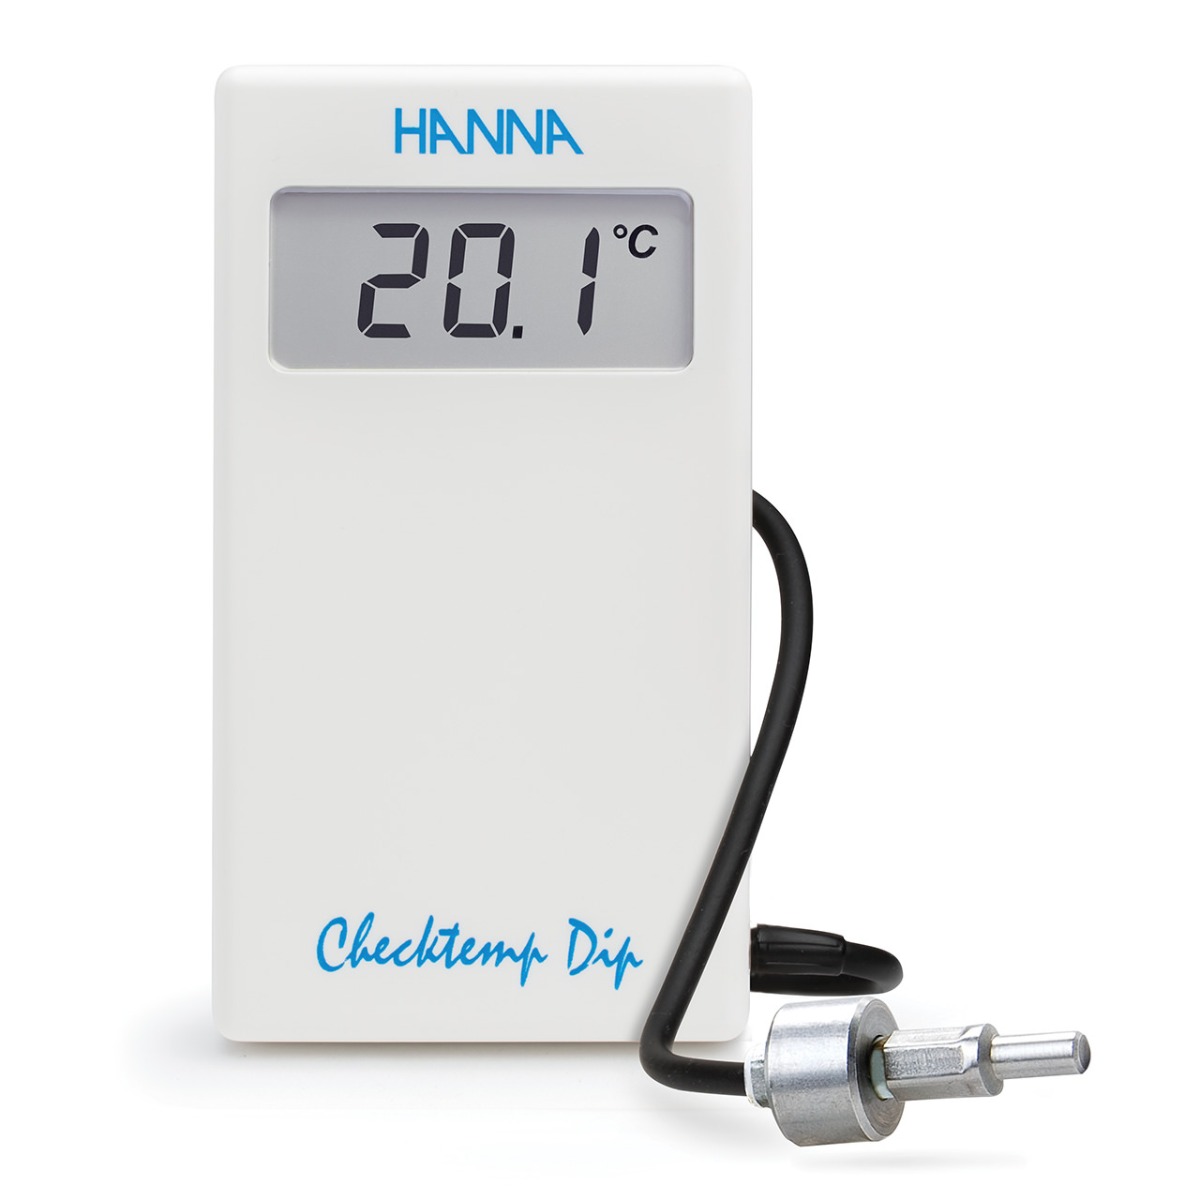 HI98539 Checktemp Dip Digital Thermometer